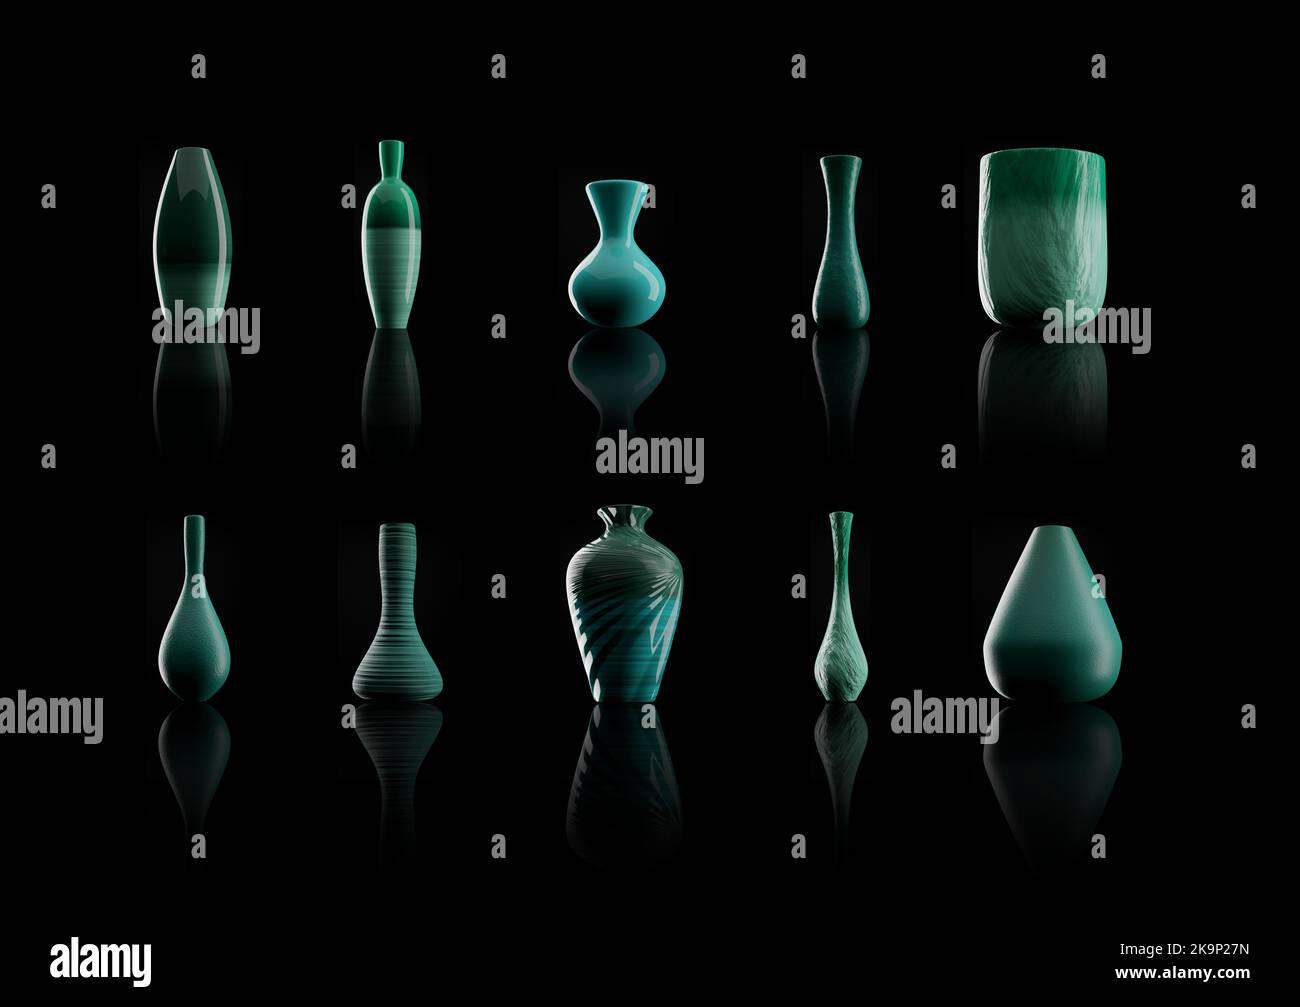 Ten different flower vases in turquoise teal color - 3D illustration Render Stock Photo